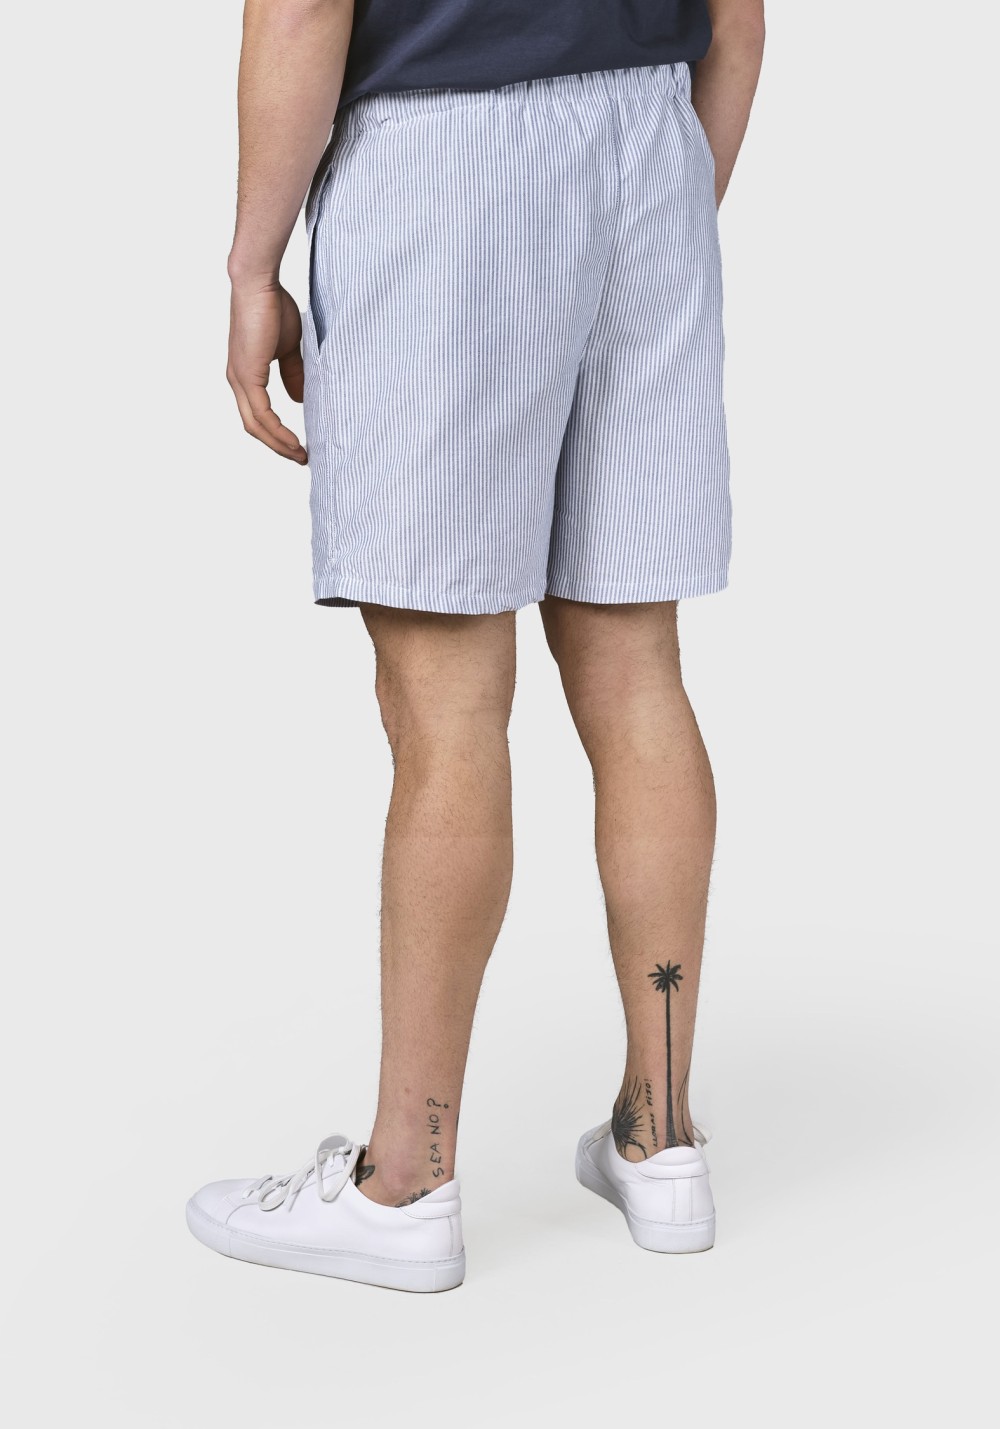 Shorts Bertram White/Navy